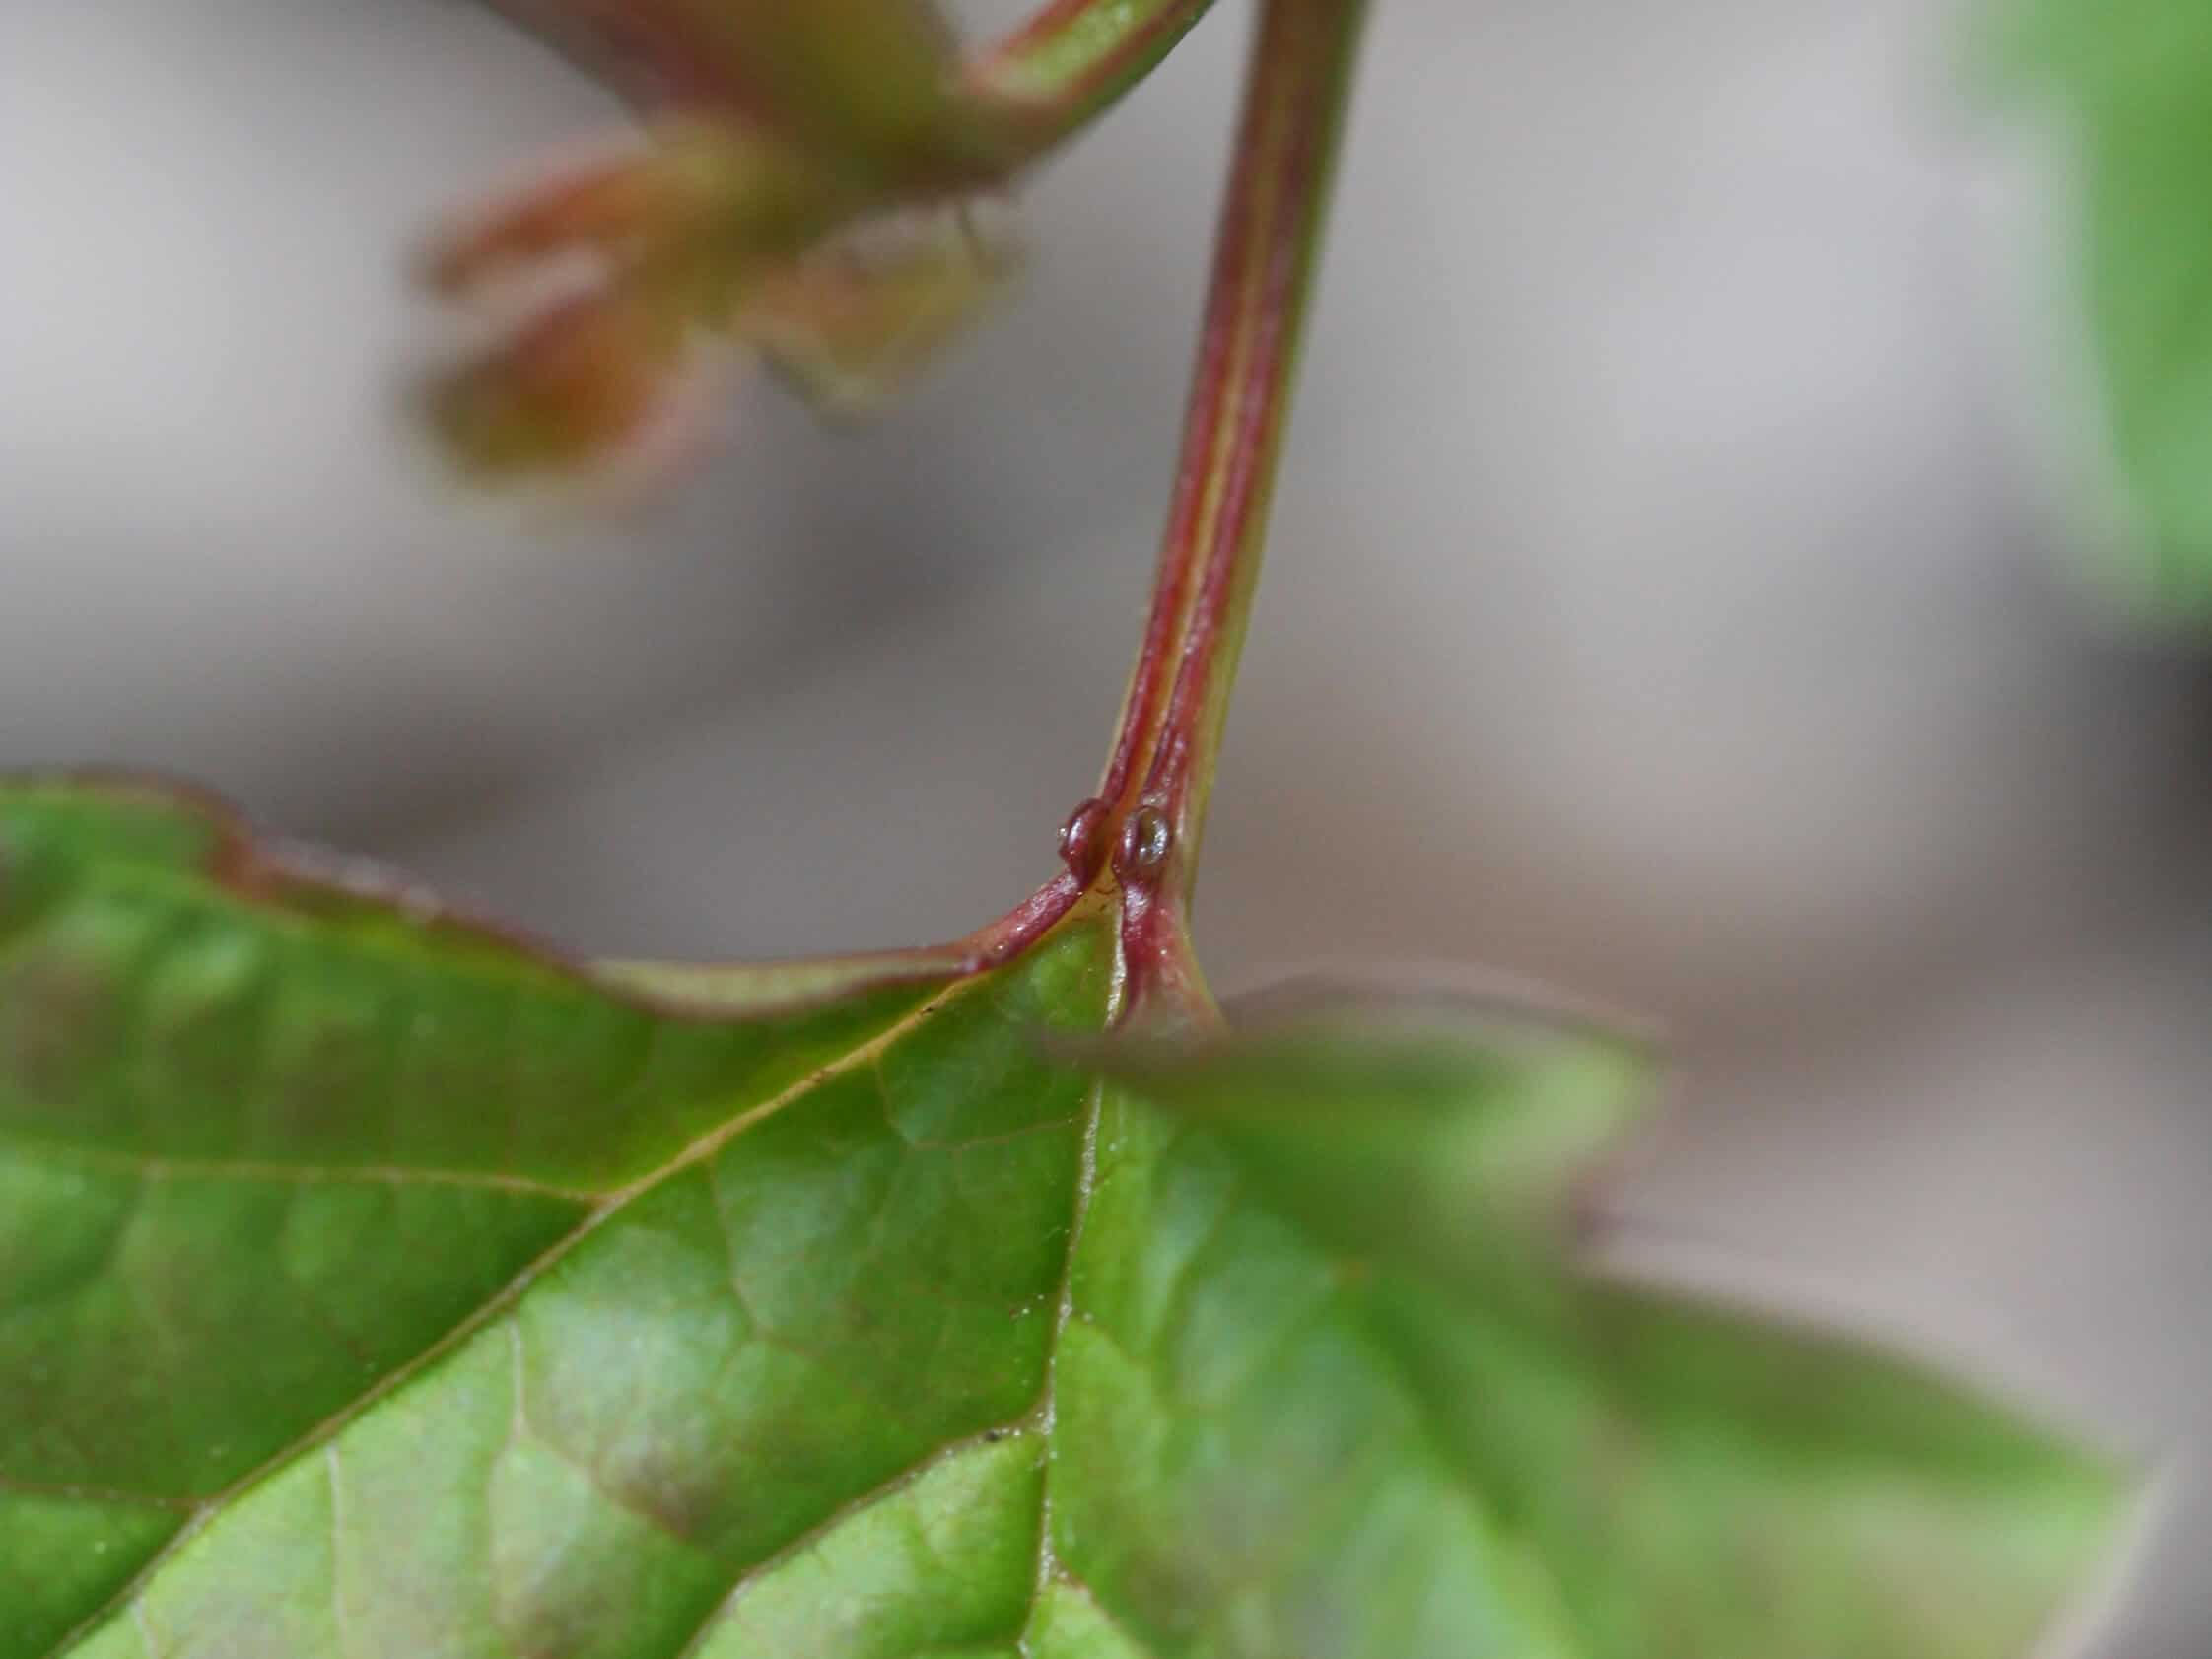 The shorter, concave petiolar glands of the European Cranberrybush